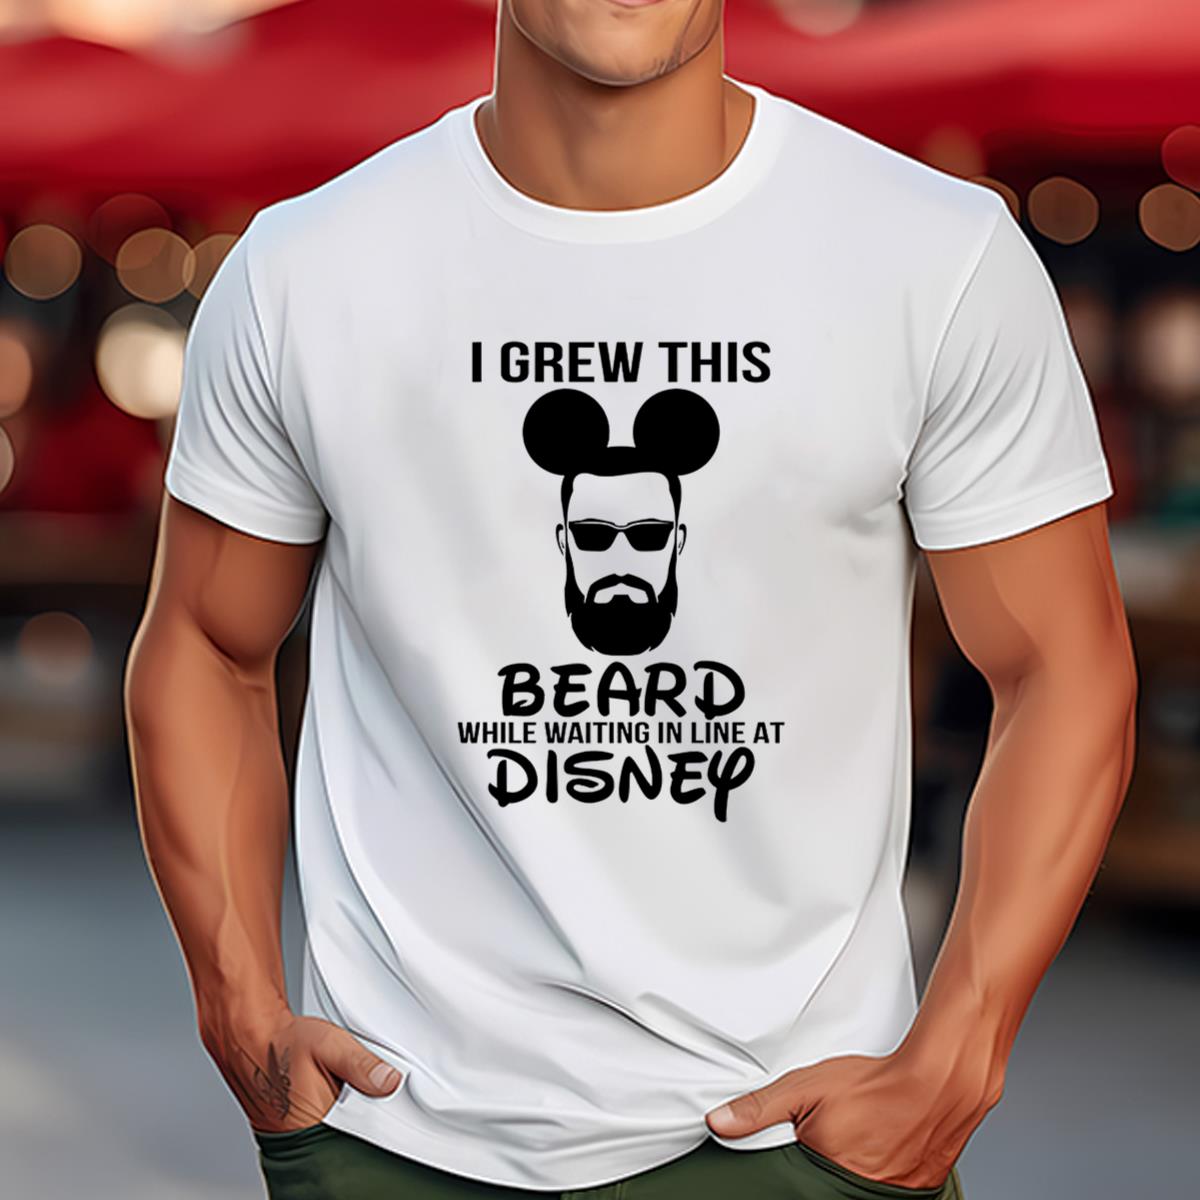 Disney Dad Shirt, I Grew This Beard While Waiting In Line At Disney Shirt